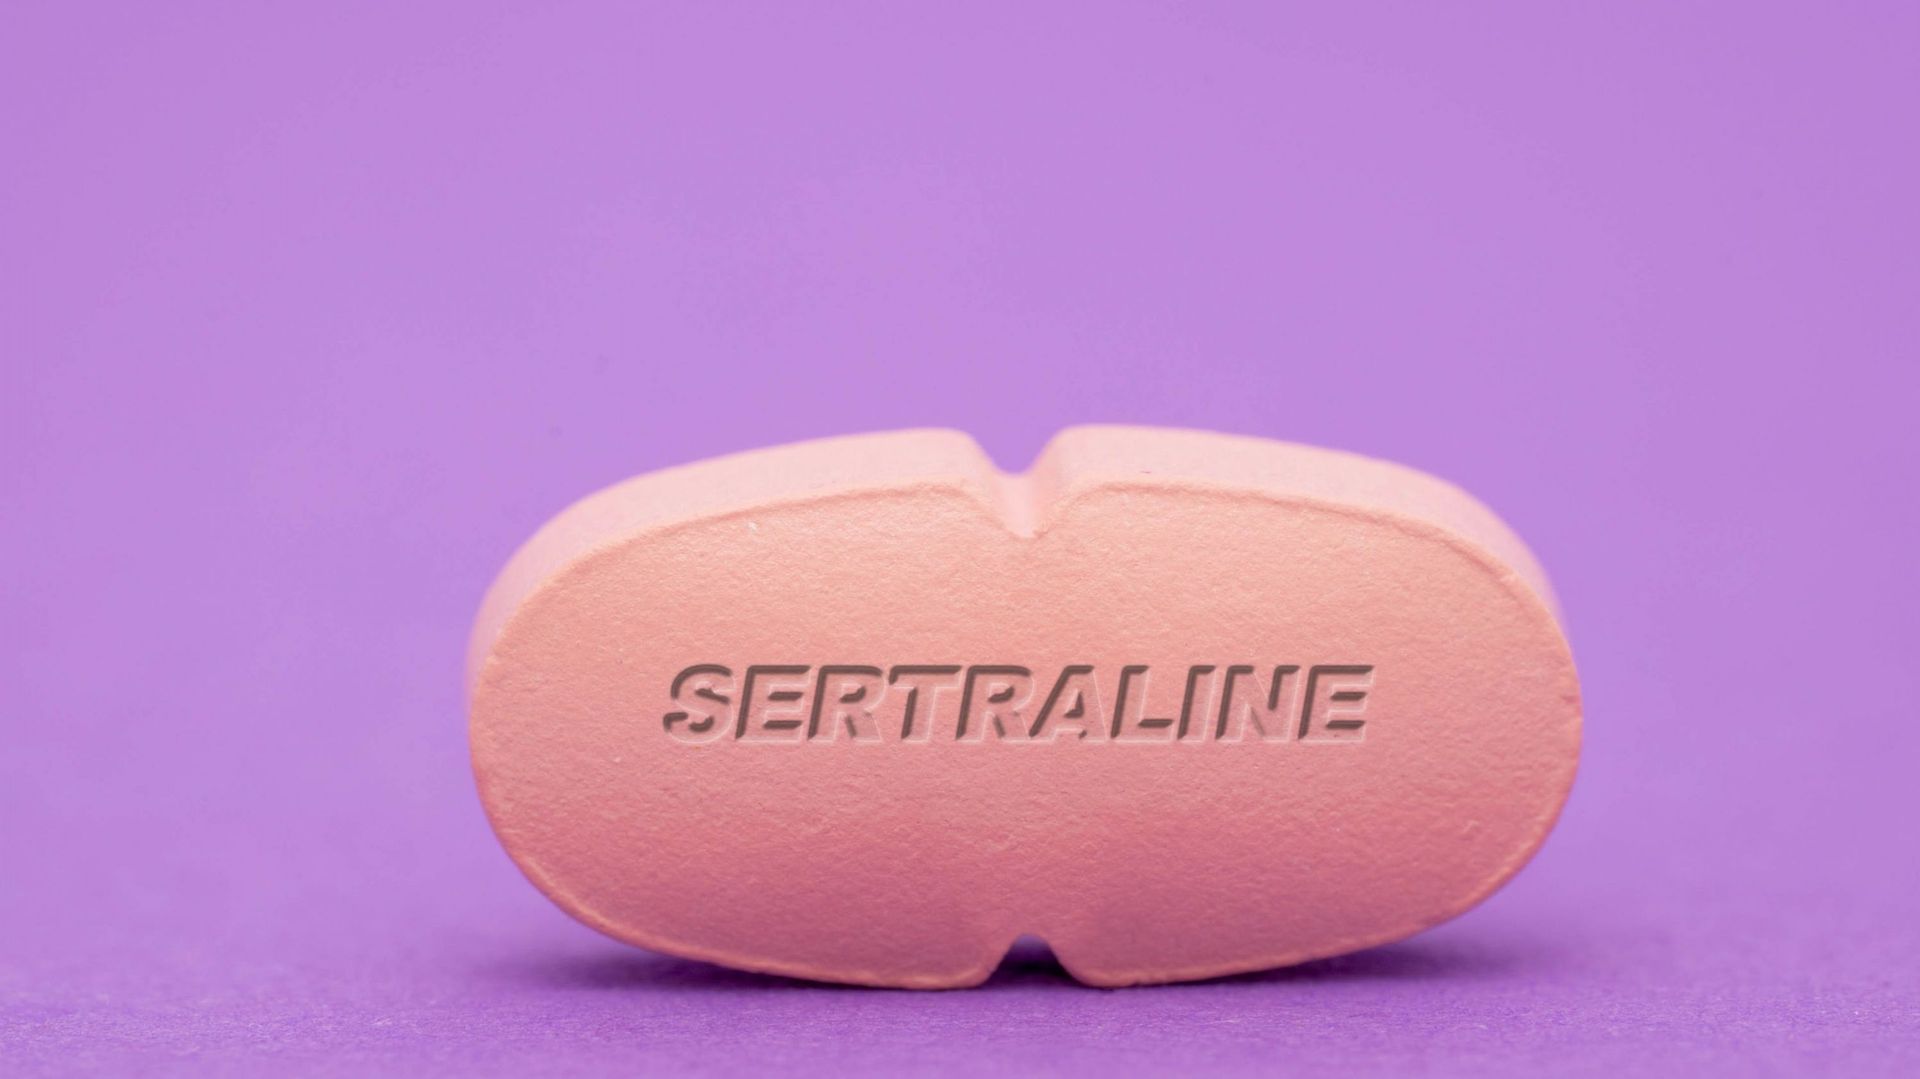 Sertraline pill, conceptual image